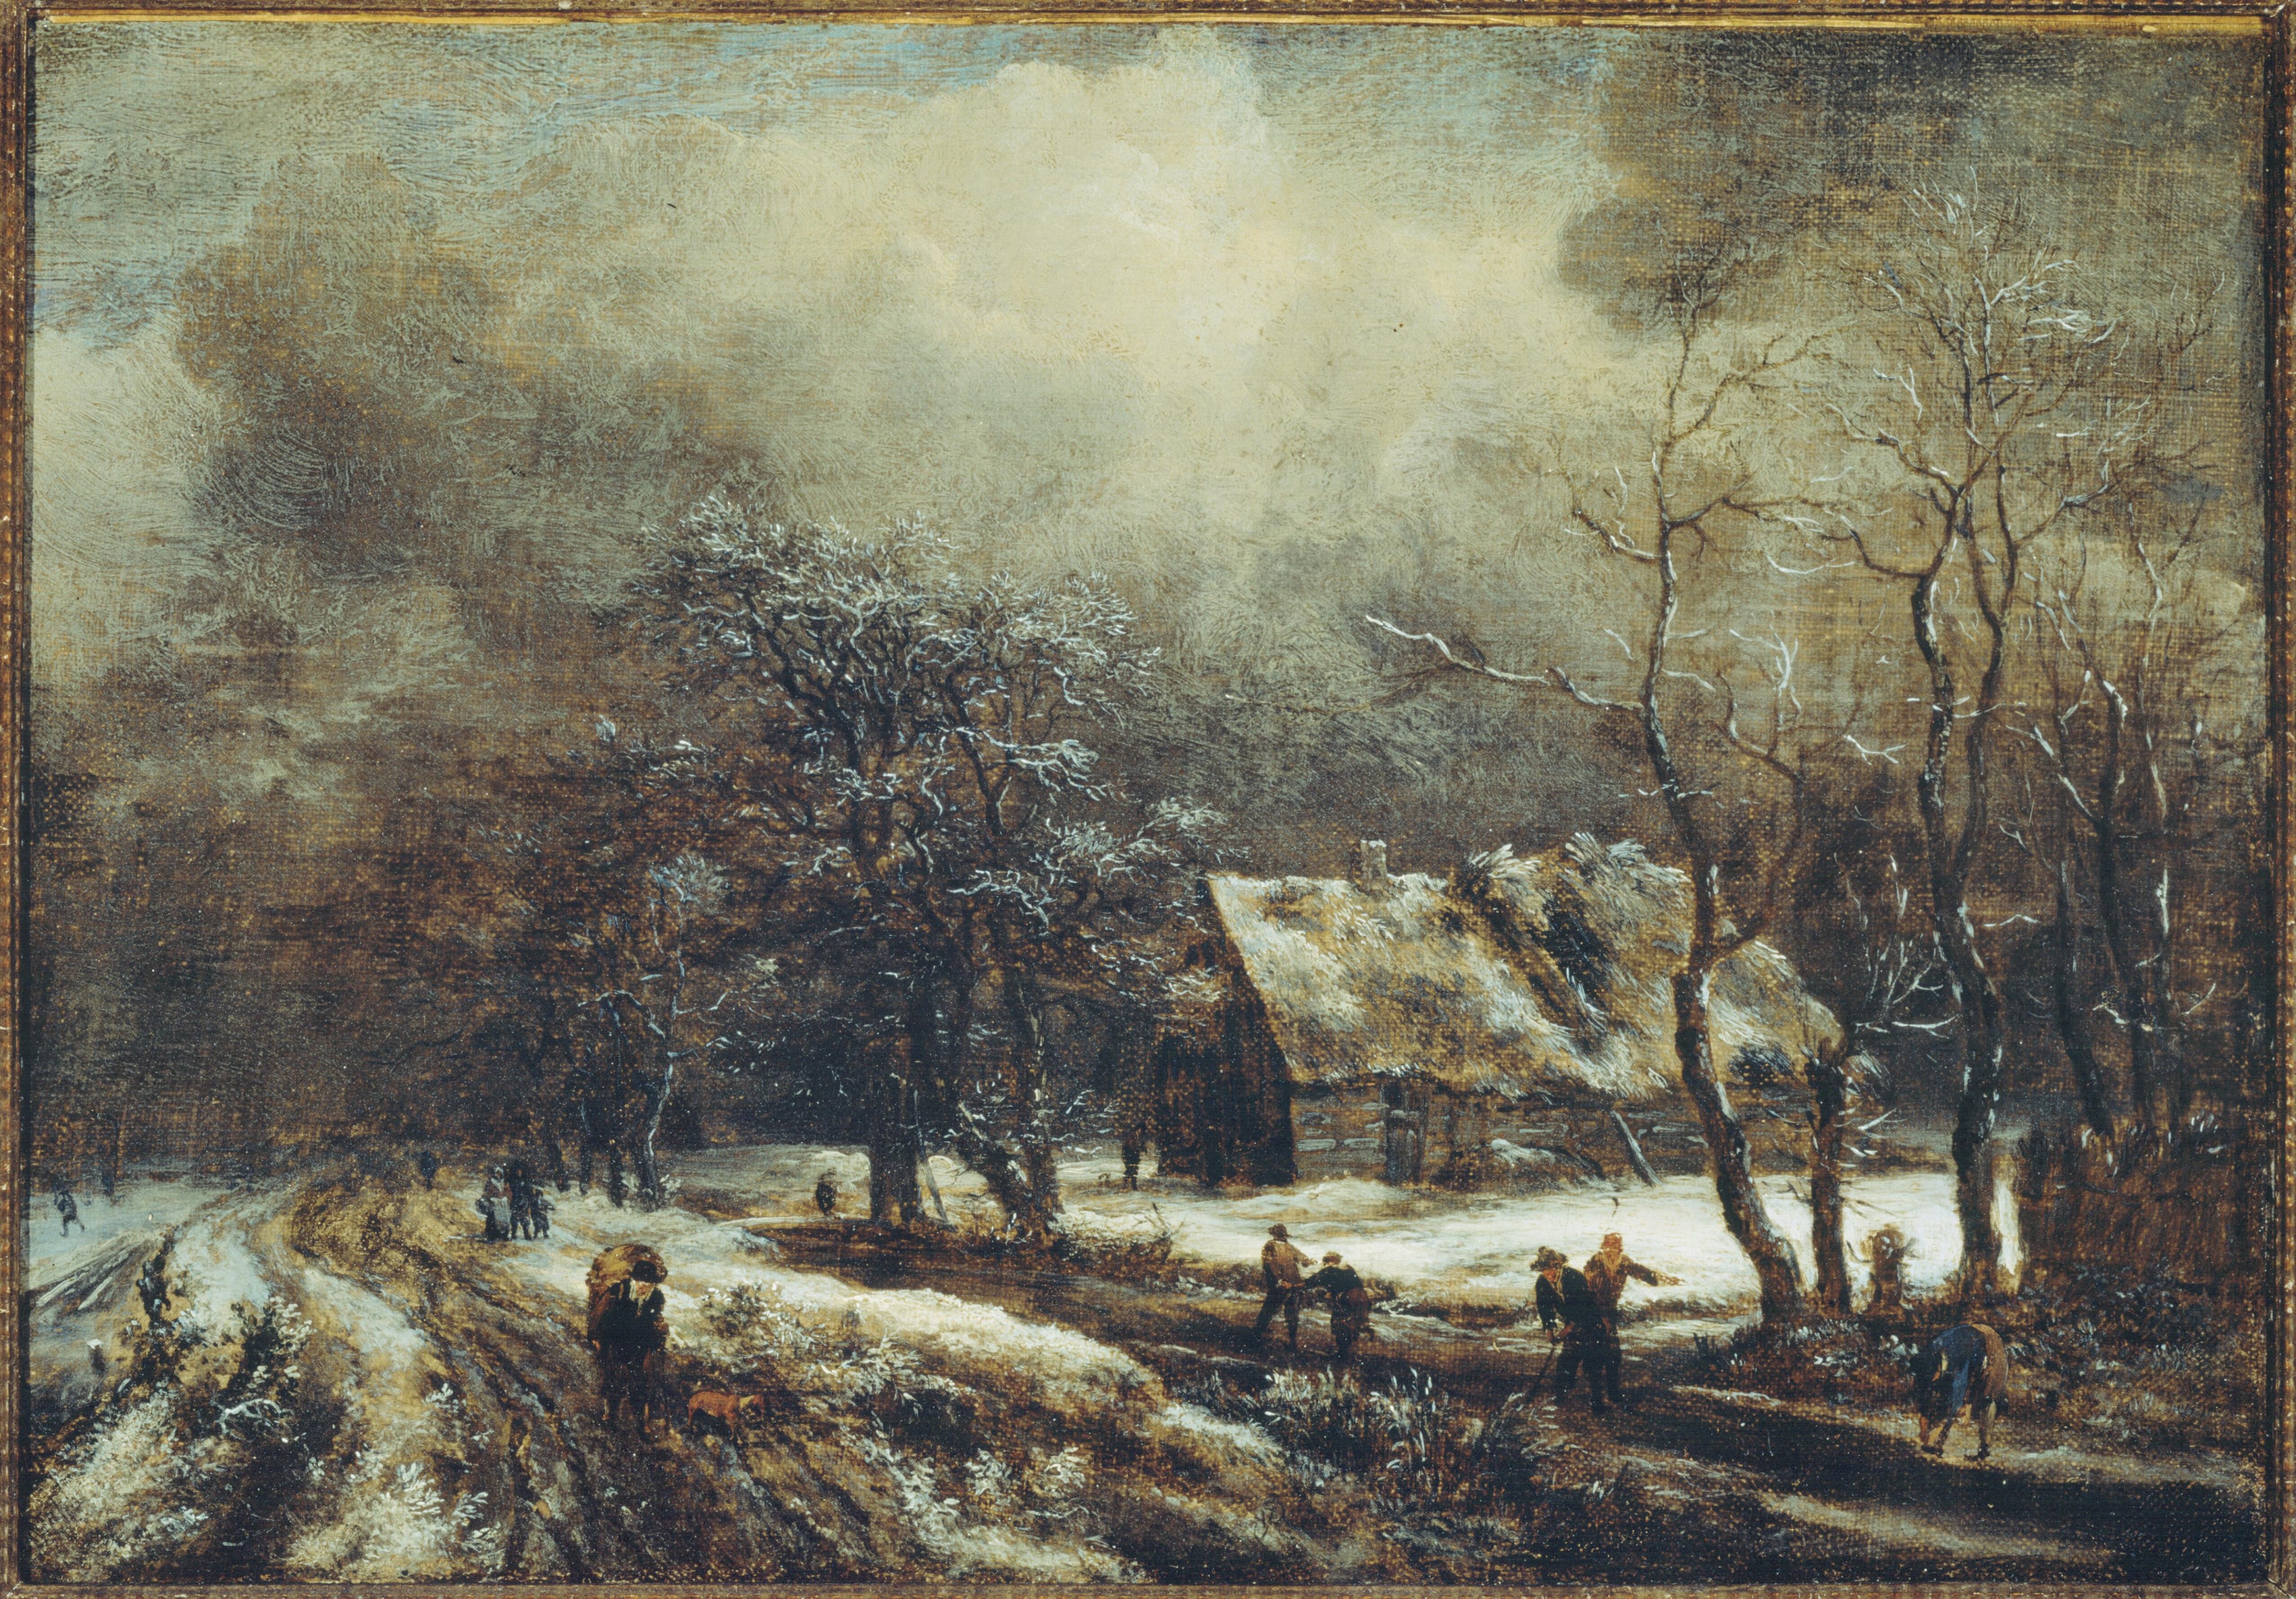 Jacob van Ruisdael - Winter Landscape with Ice Skating